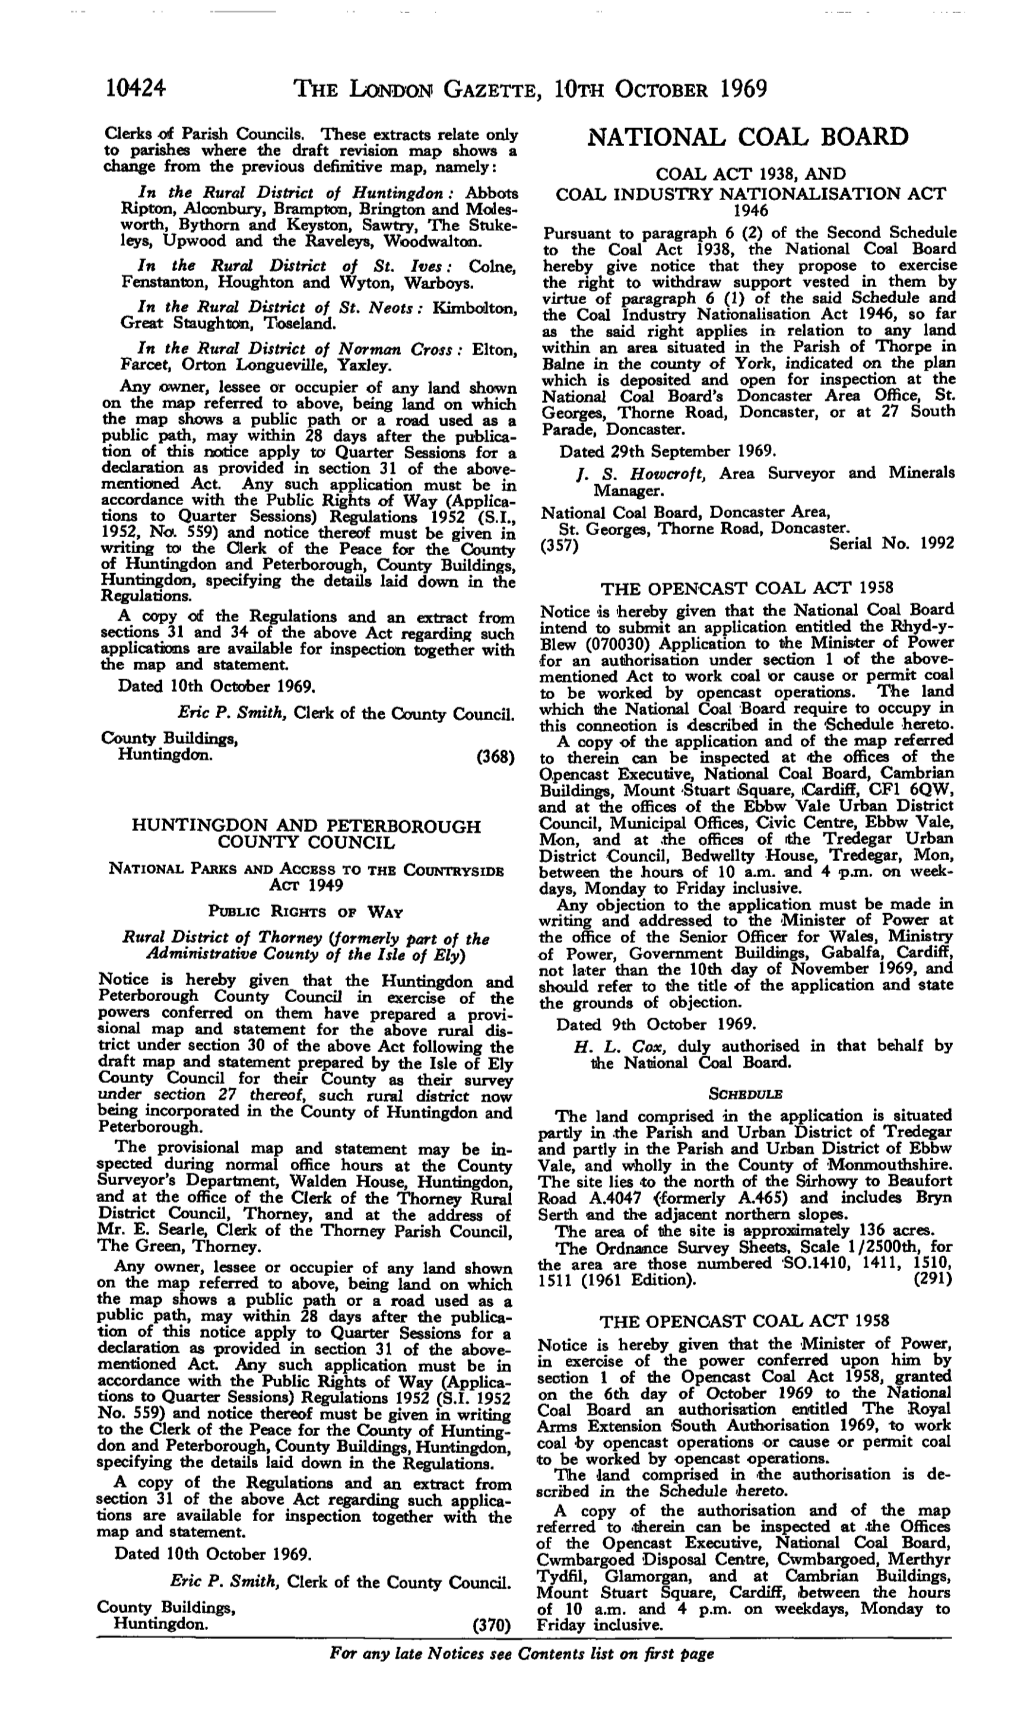 10424 the London Gazette, Ioth October 1969 National Coal